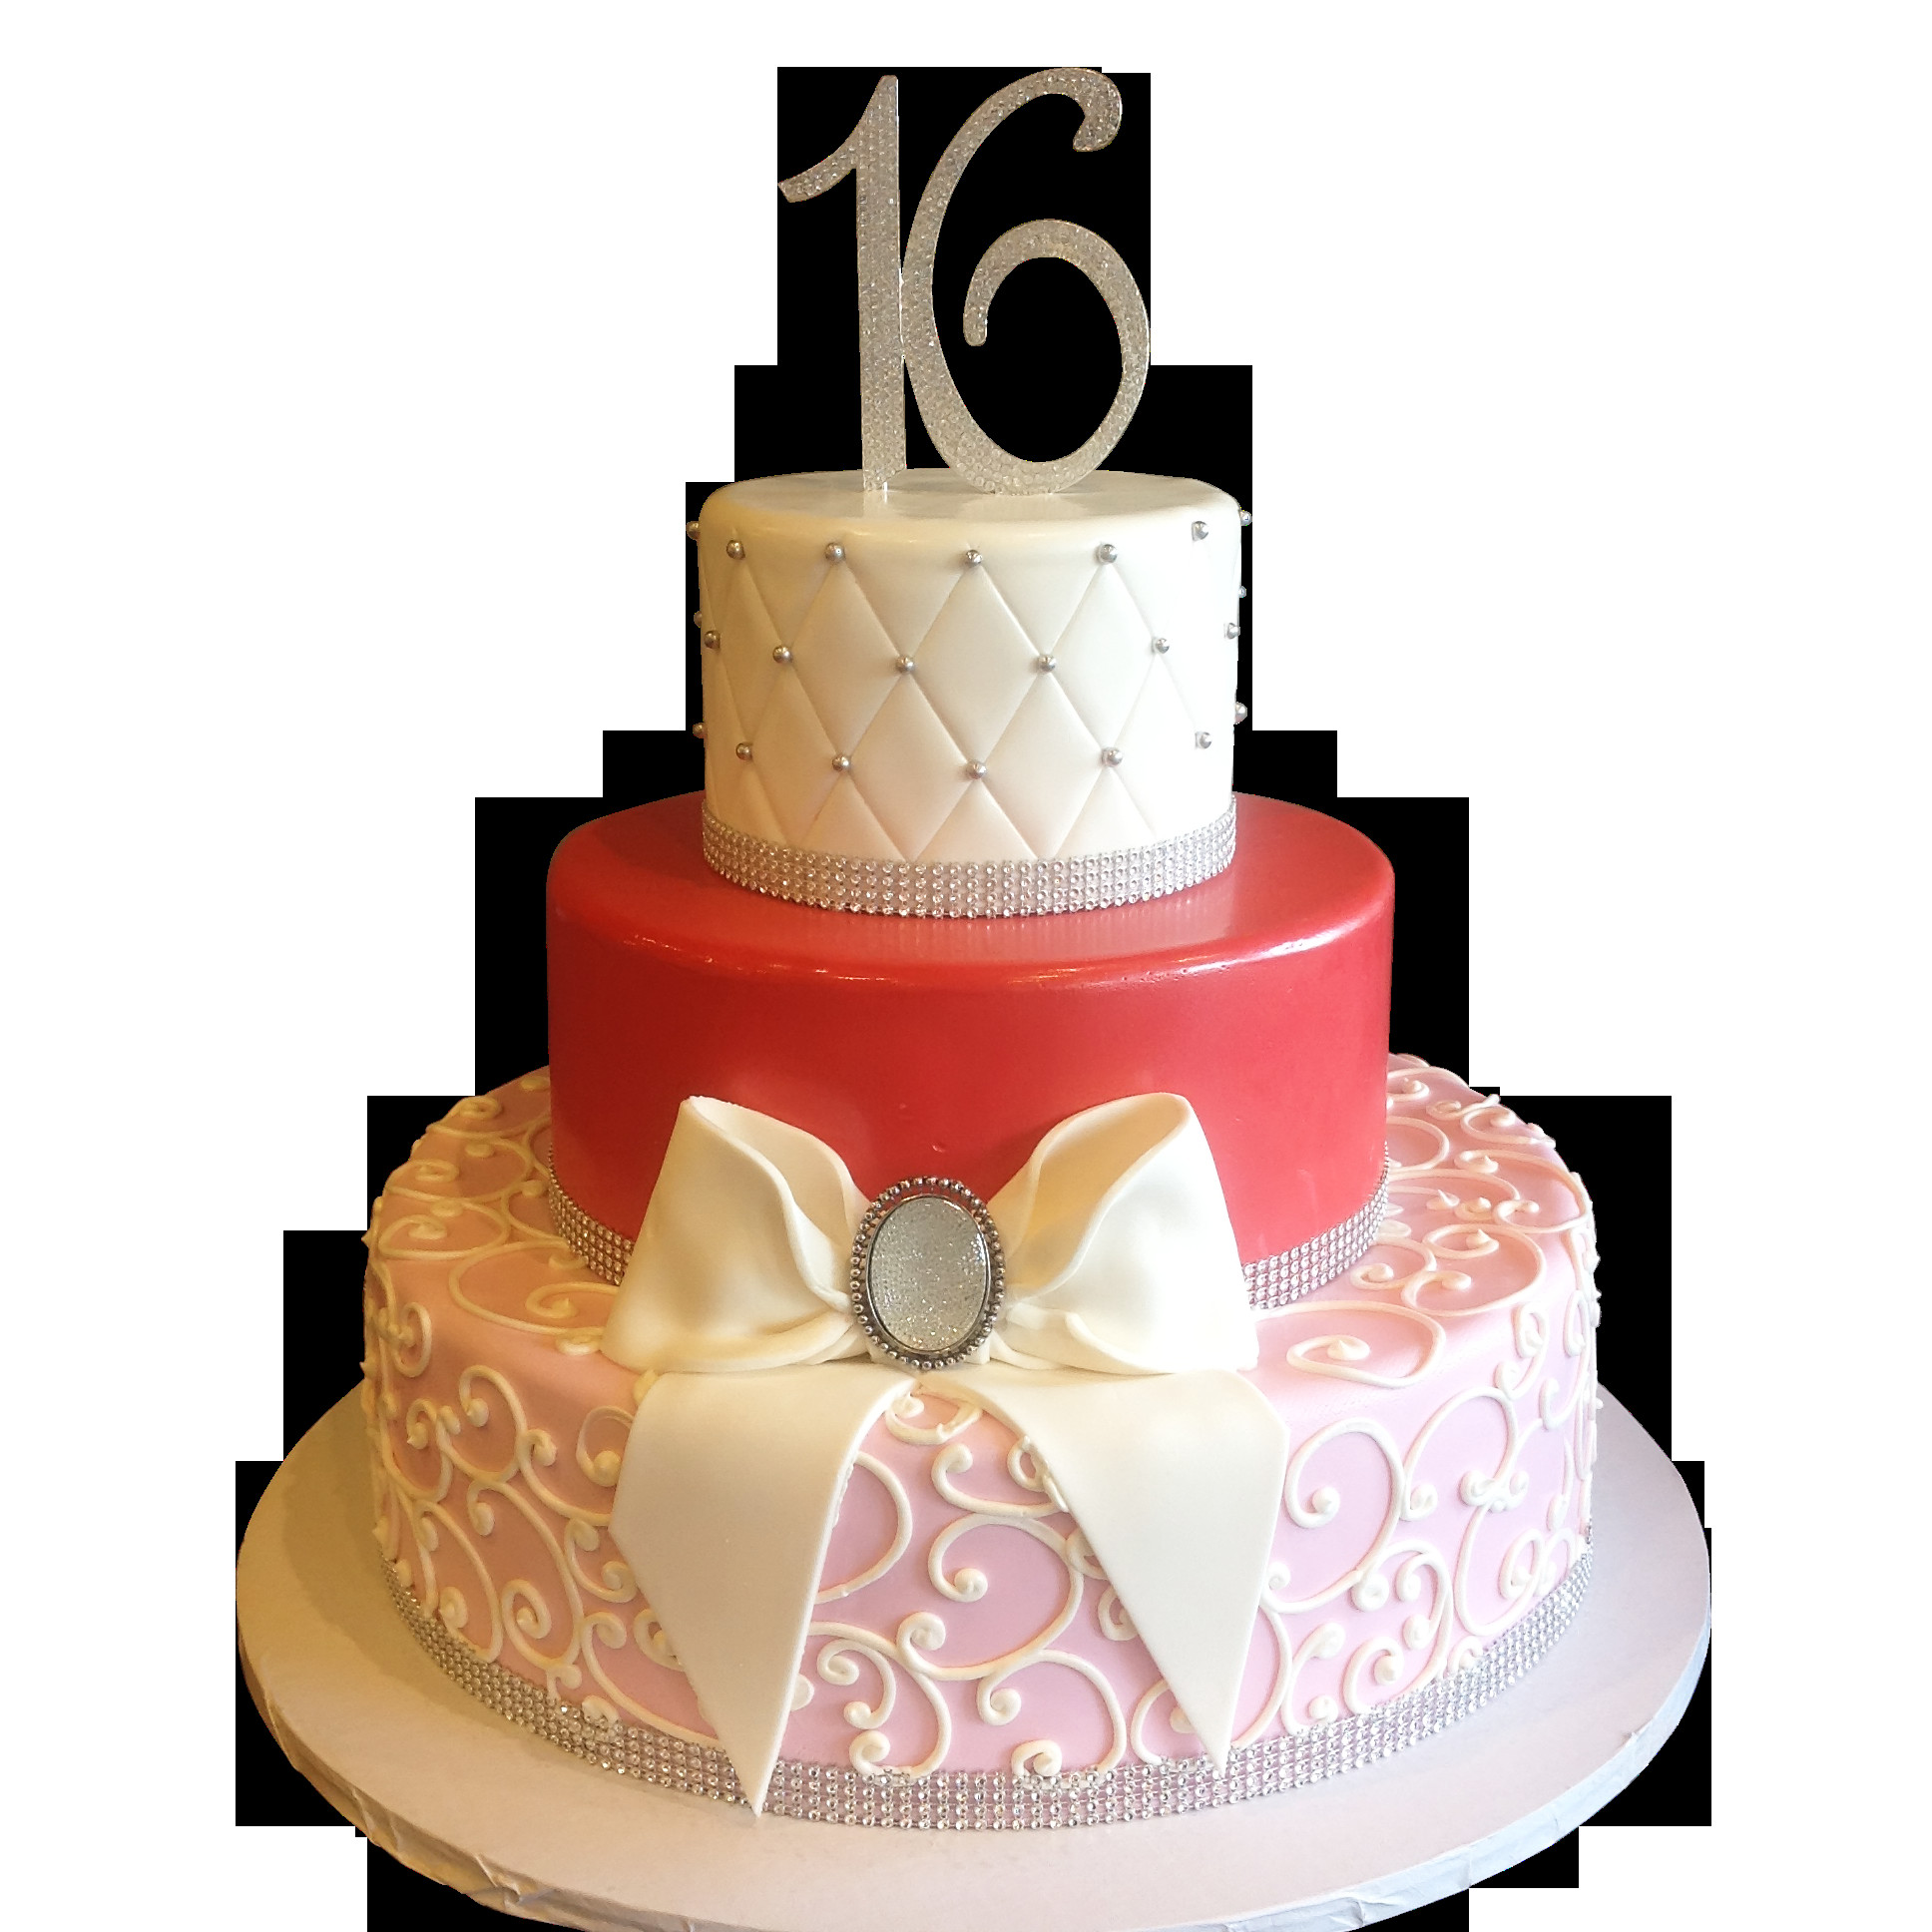 Sweet 16 Birthday Cake
 Elegant Sweet 16 Birthday Cakes in NYC